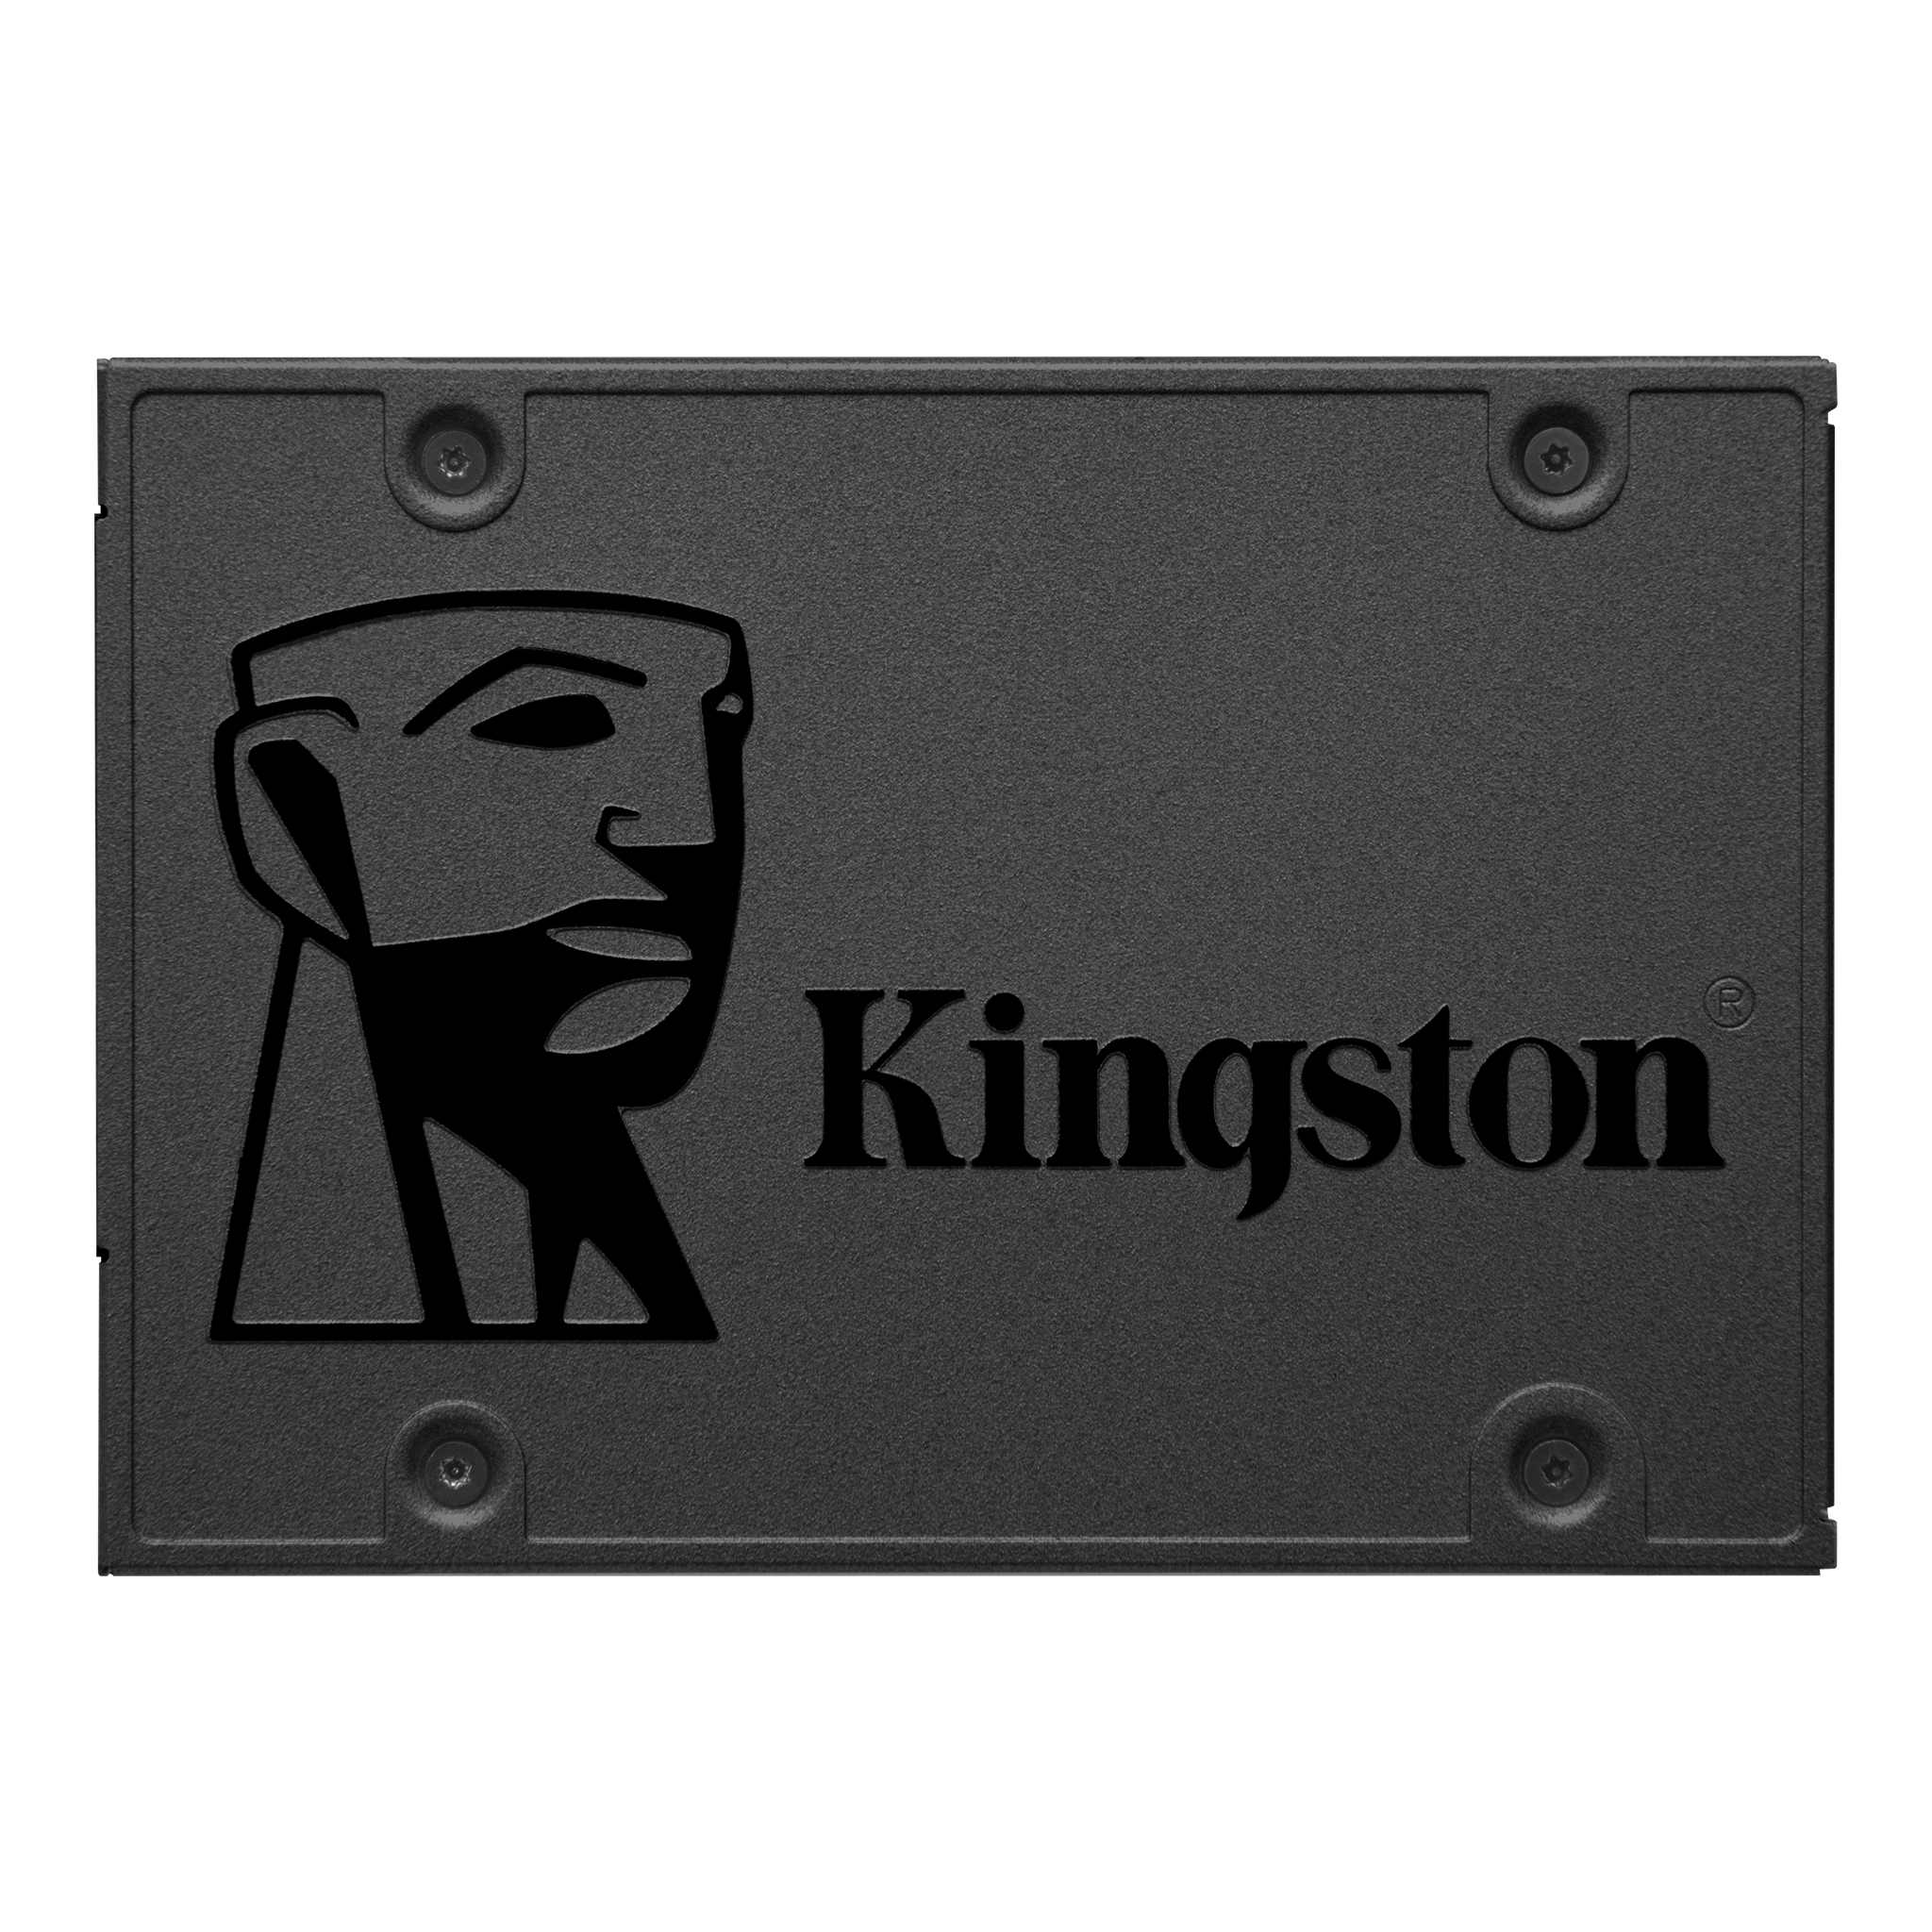 A400 Solid State Drive – 120GB–1.92TB - Kingston